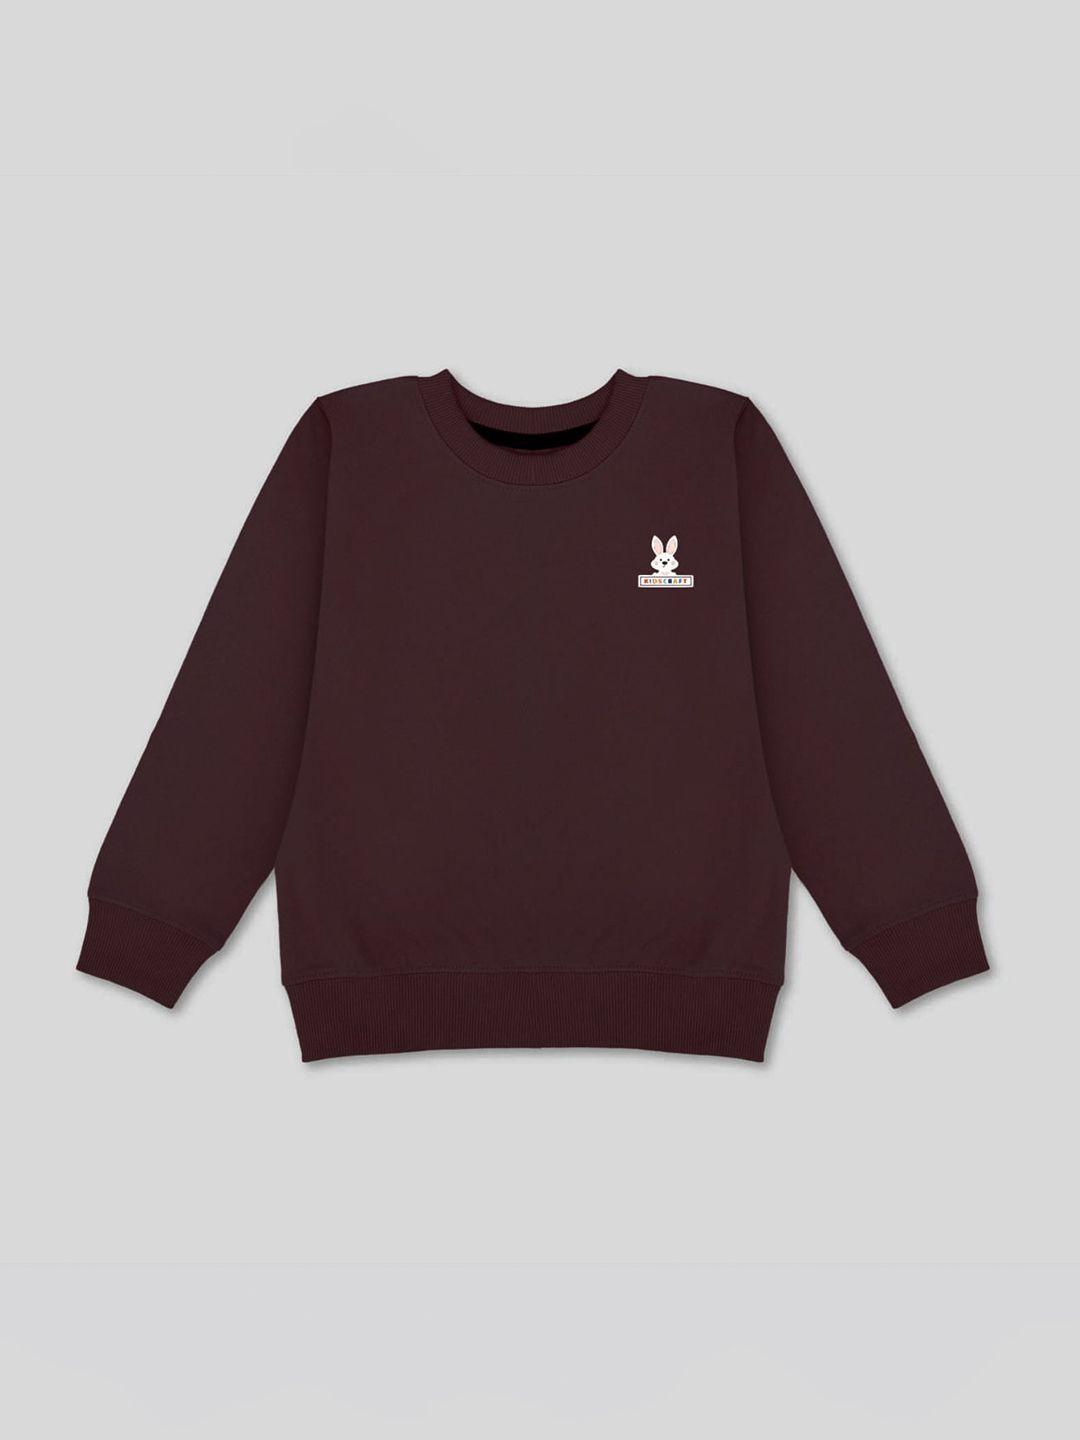 kidscraft-boys-brown-sweatshirt